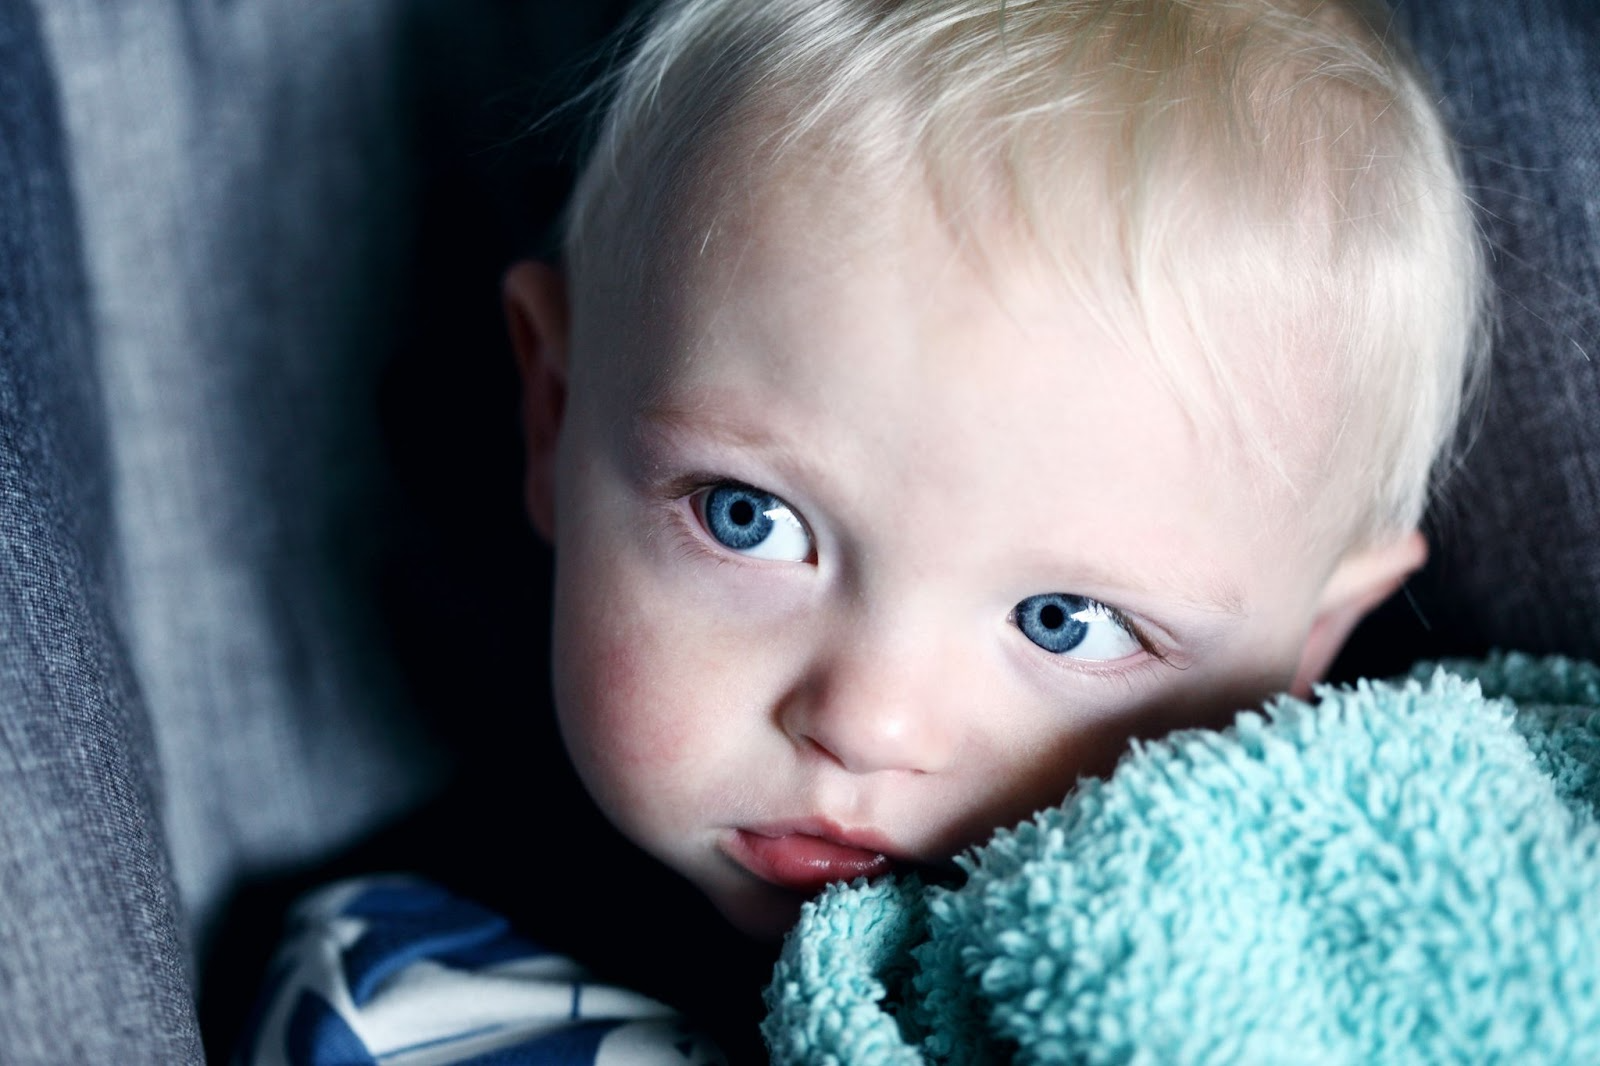 Baby Safety: Car, Toys, Choking, Falls, Sleeping, and More